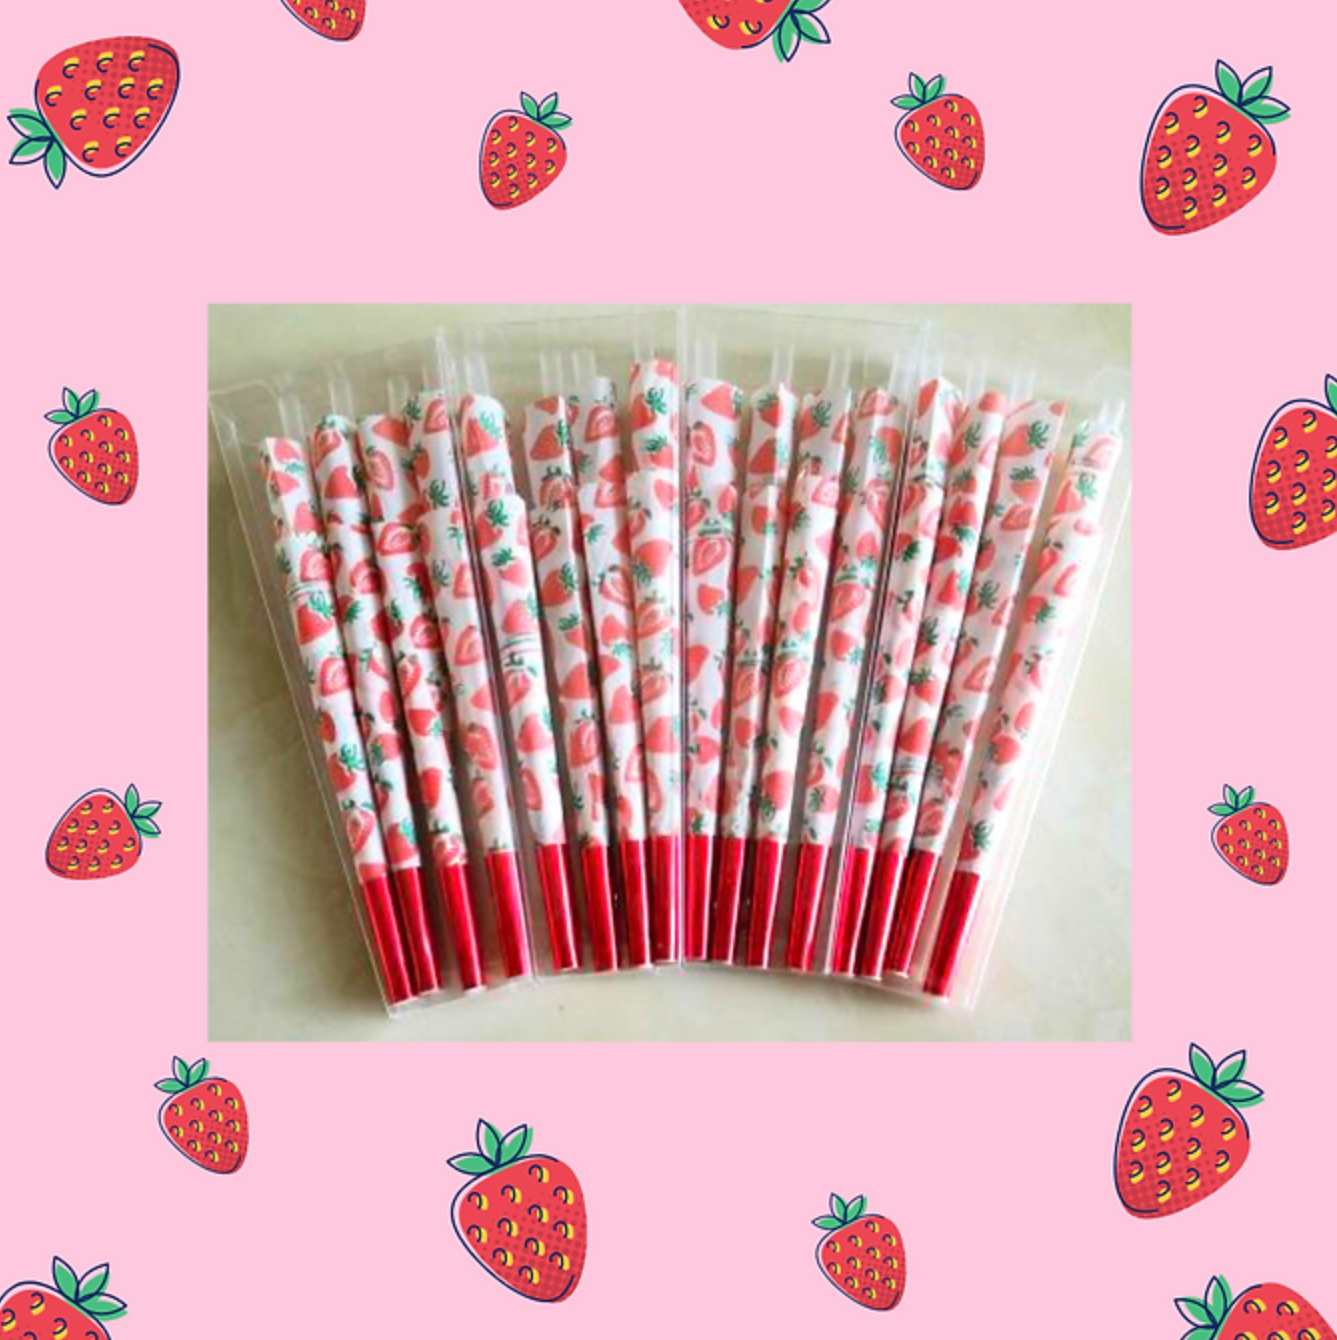 Strawberry flavored cones